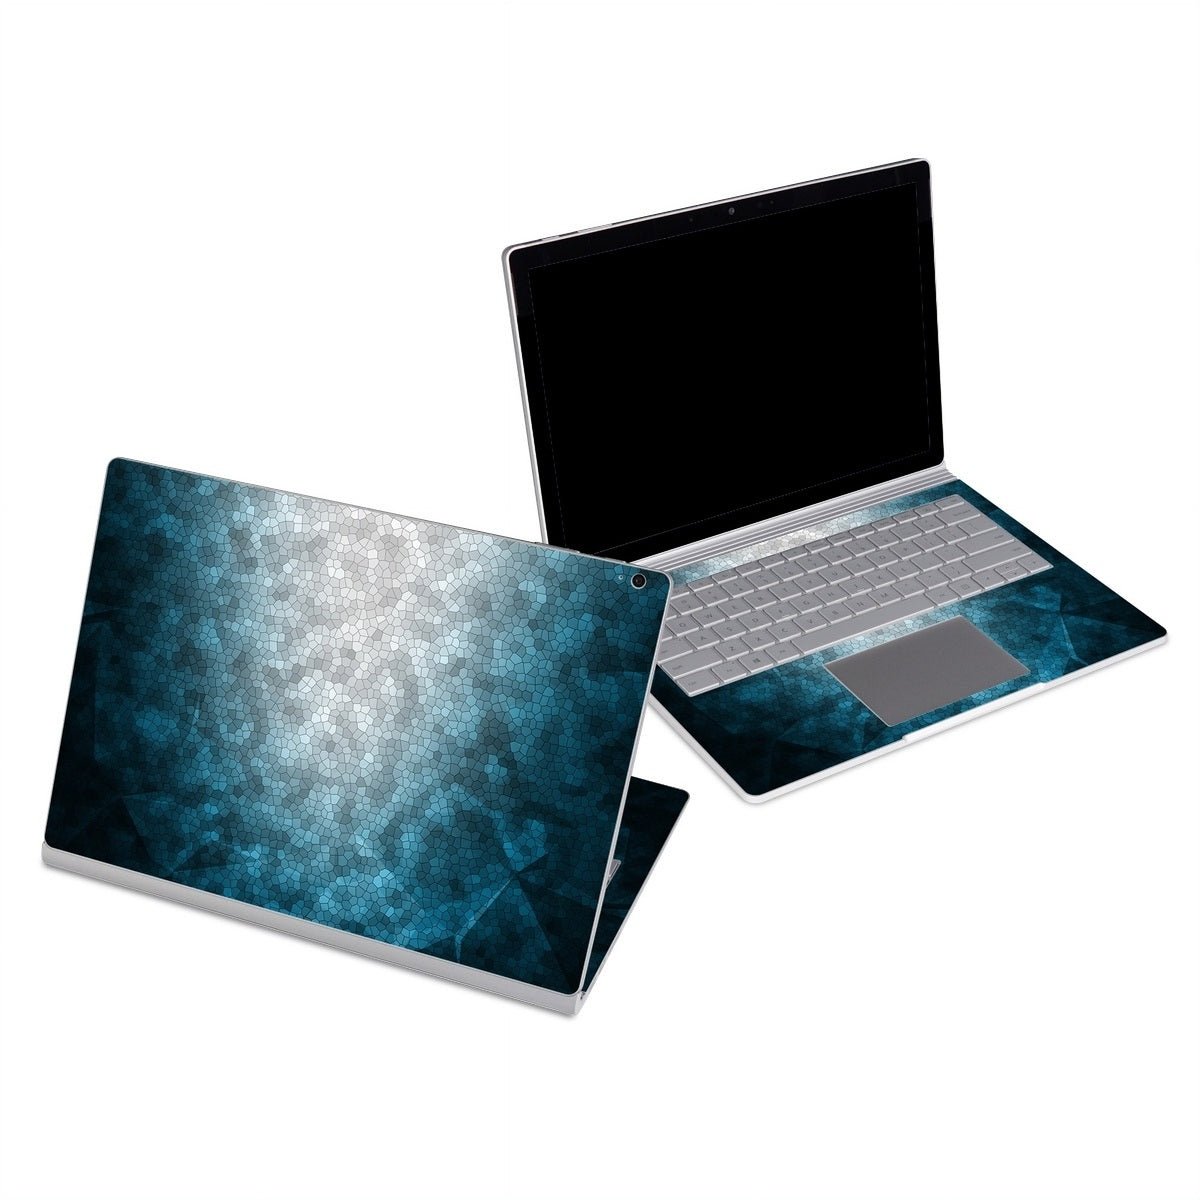 Atmospheric - Microsoft Surface Book Skin - Camo - DecalGirl